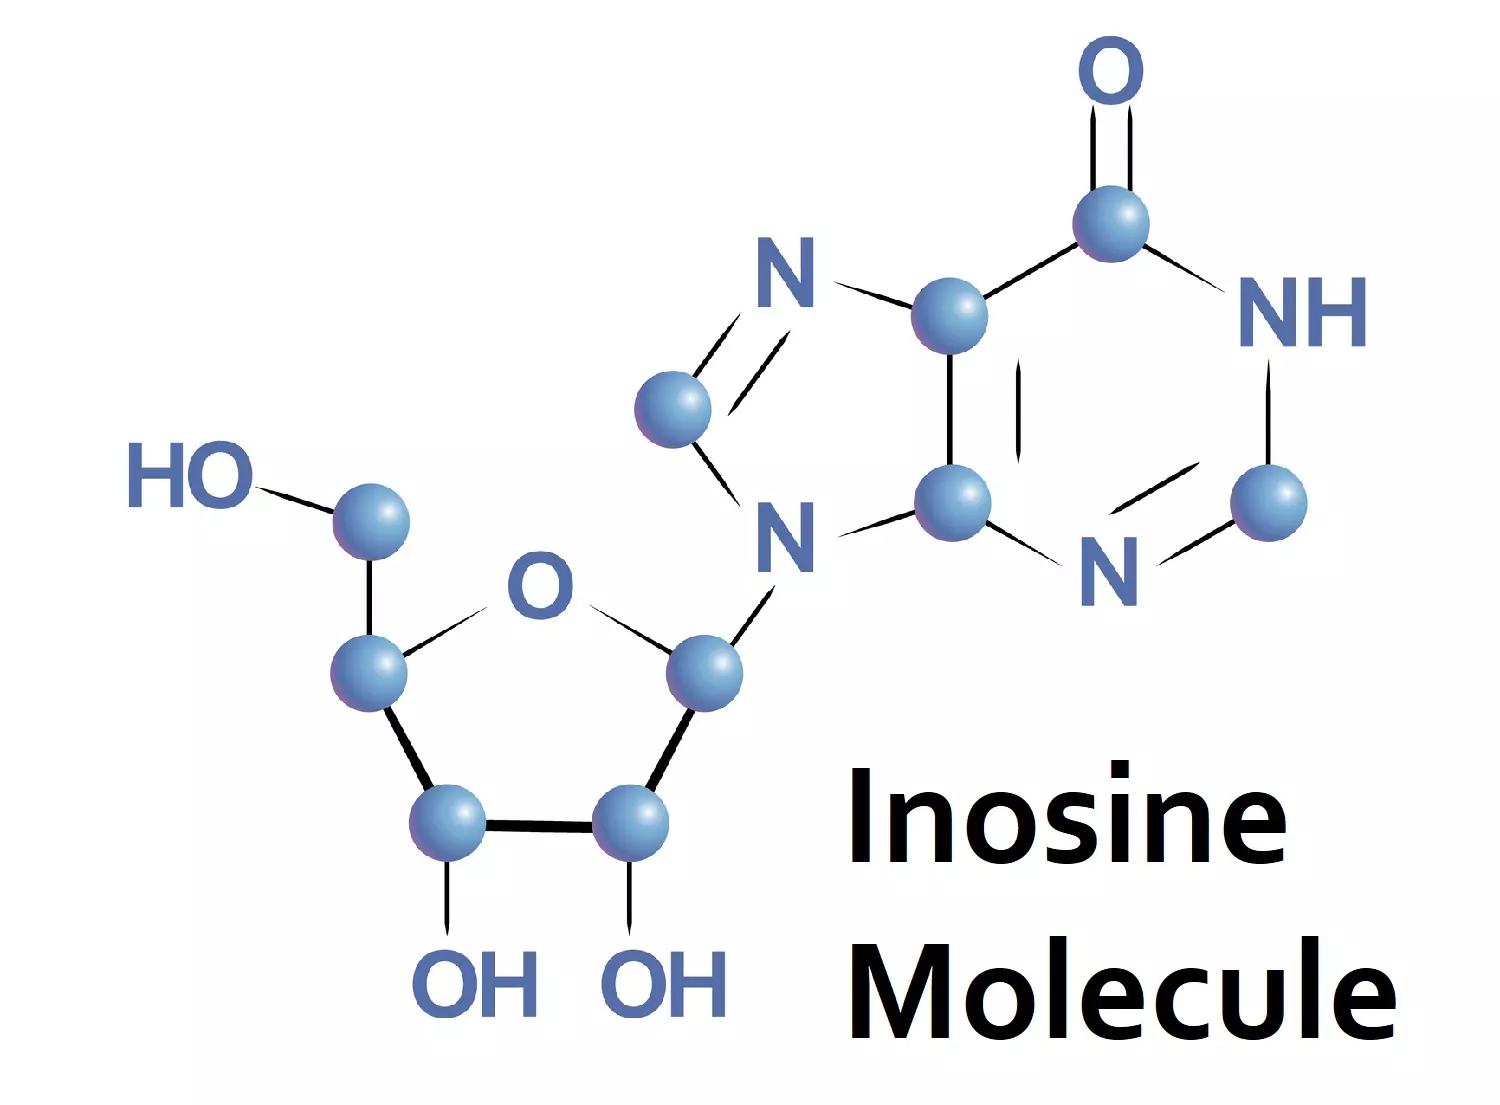 Inosine molecule in tRNA: ID 84208656 © Lyricsai | Dreamstime.com